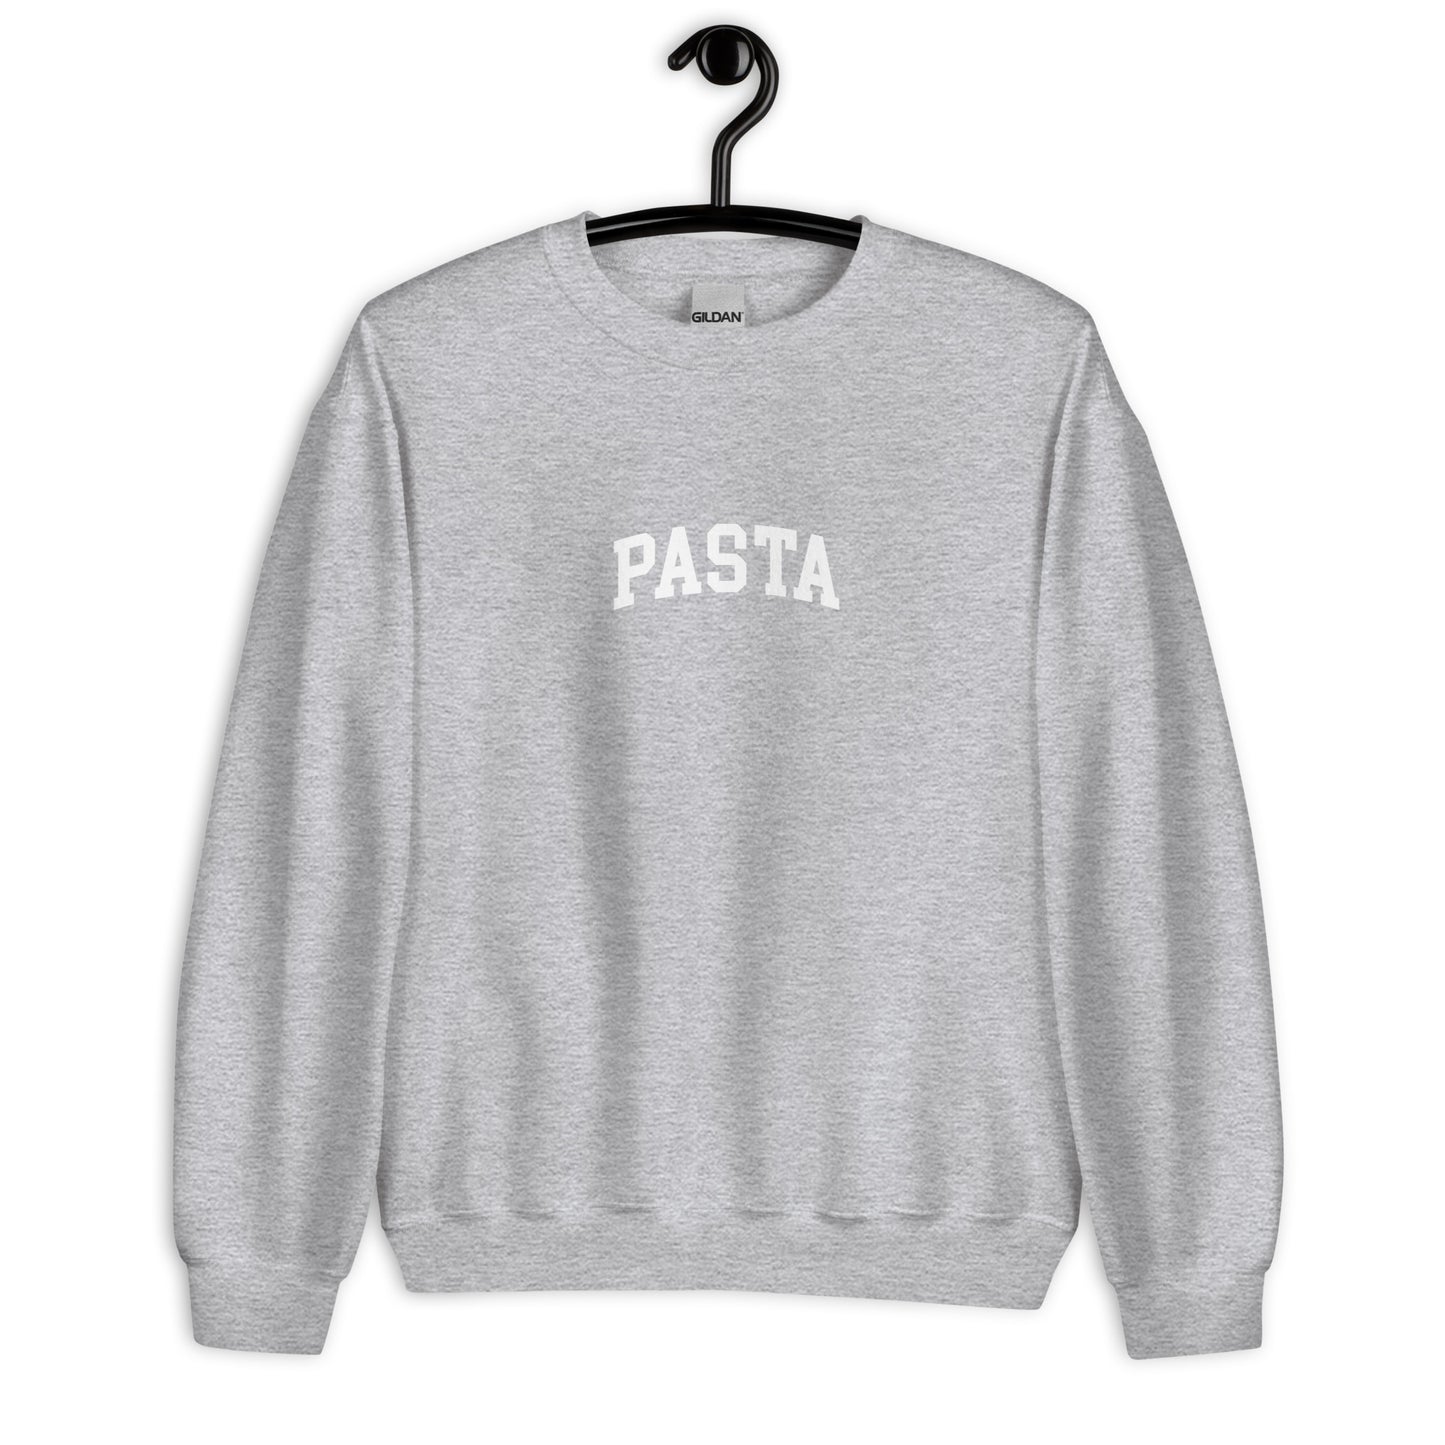 Pasta Sweatshirt - Straight Font